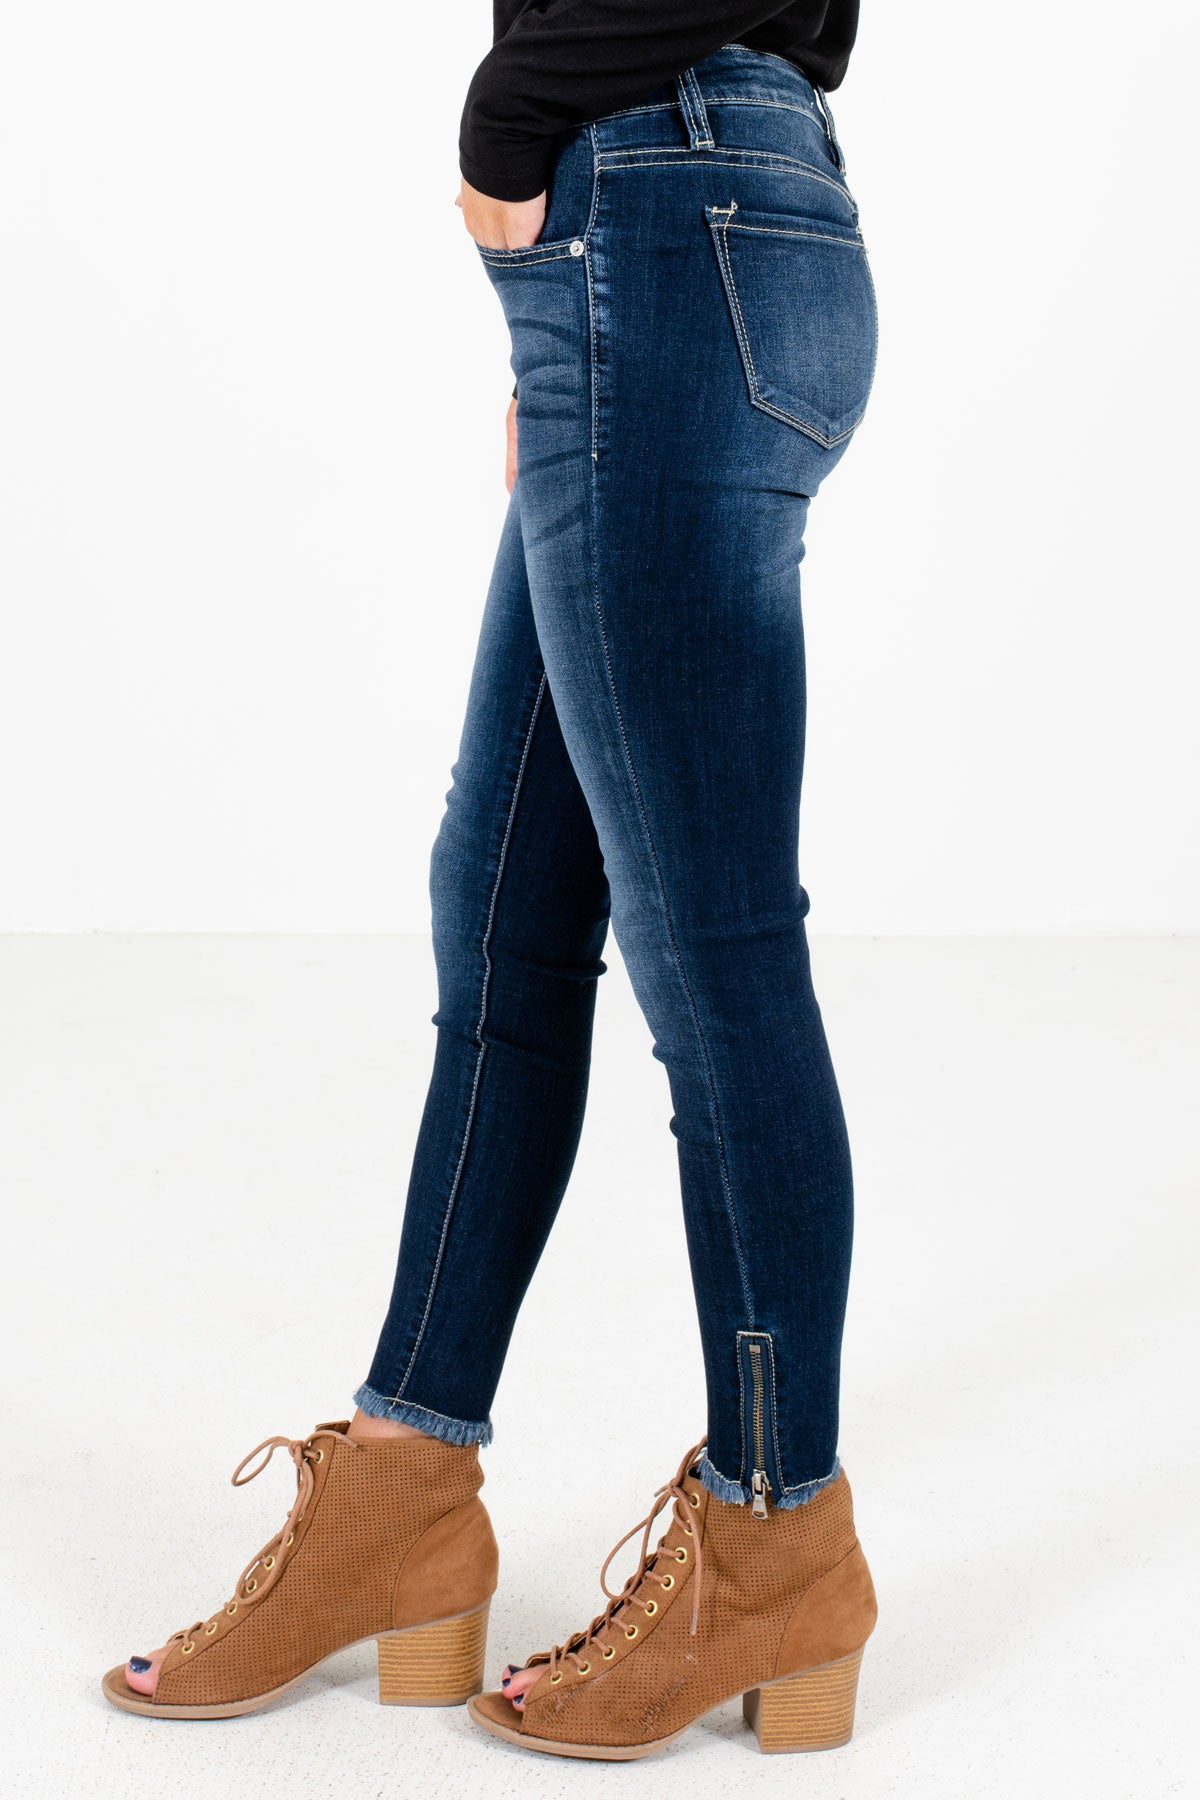 Dark Wash Blue Frayed and Zipper Hem Detailed Boutique Skinny Jeans for Women